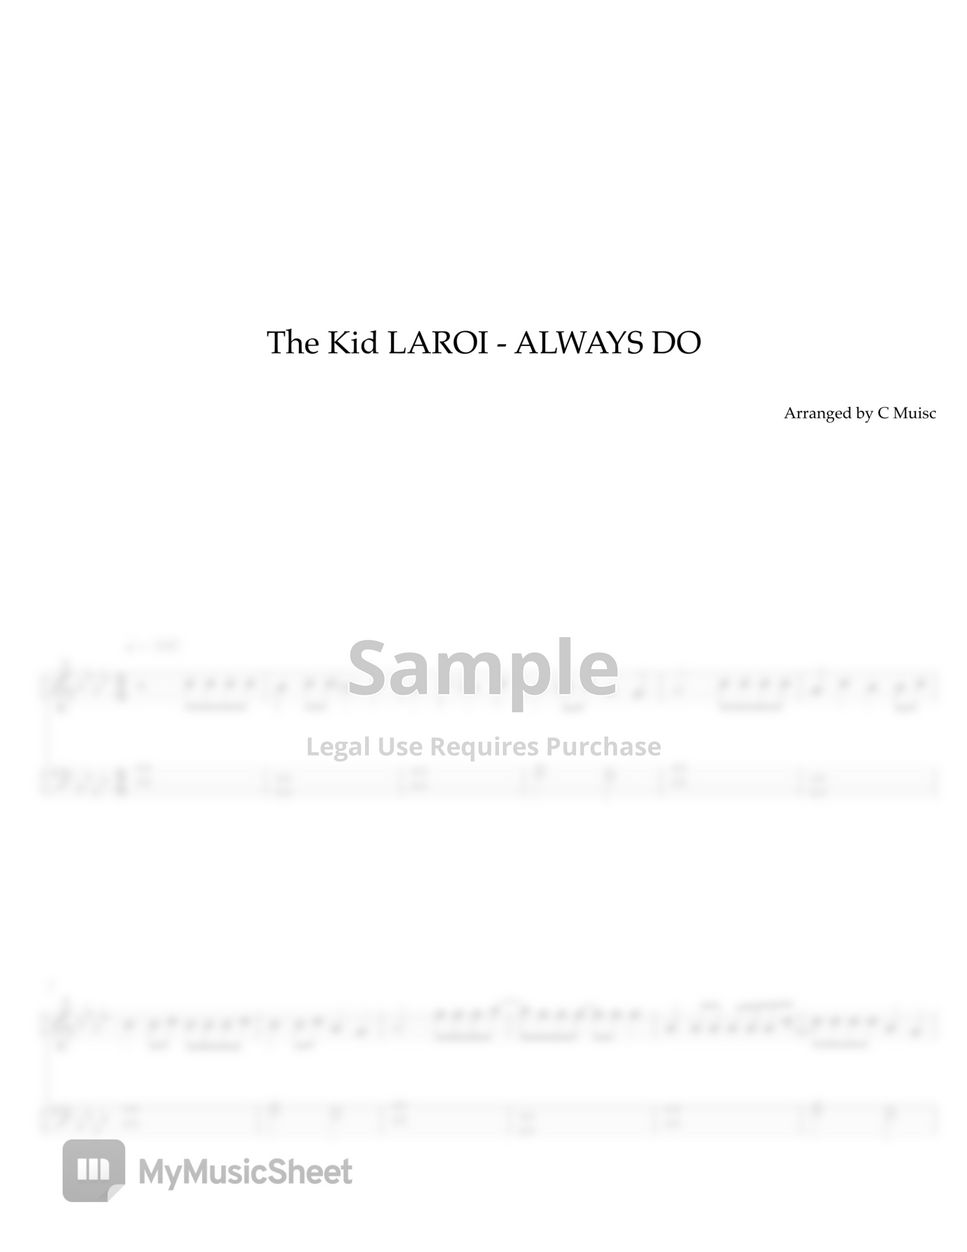 The Kid LAROI - ALWAYS DO by C Music